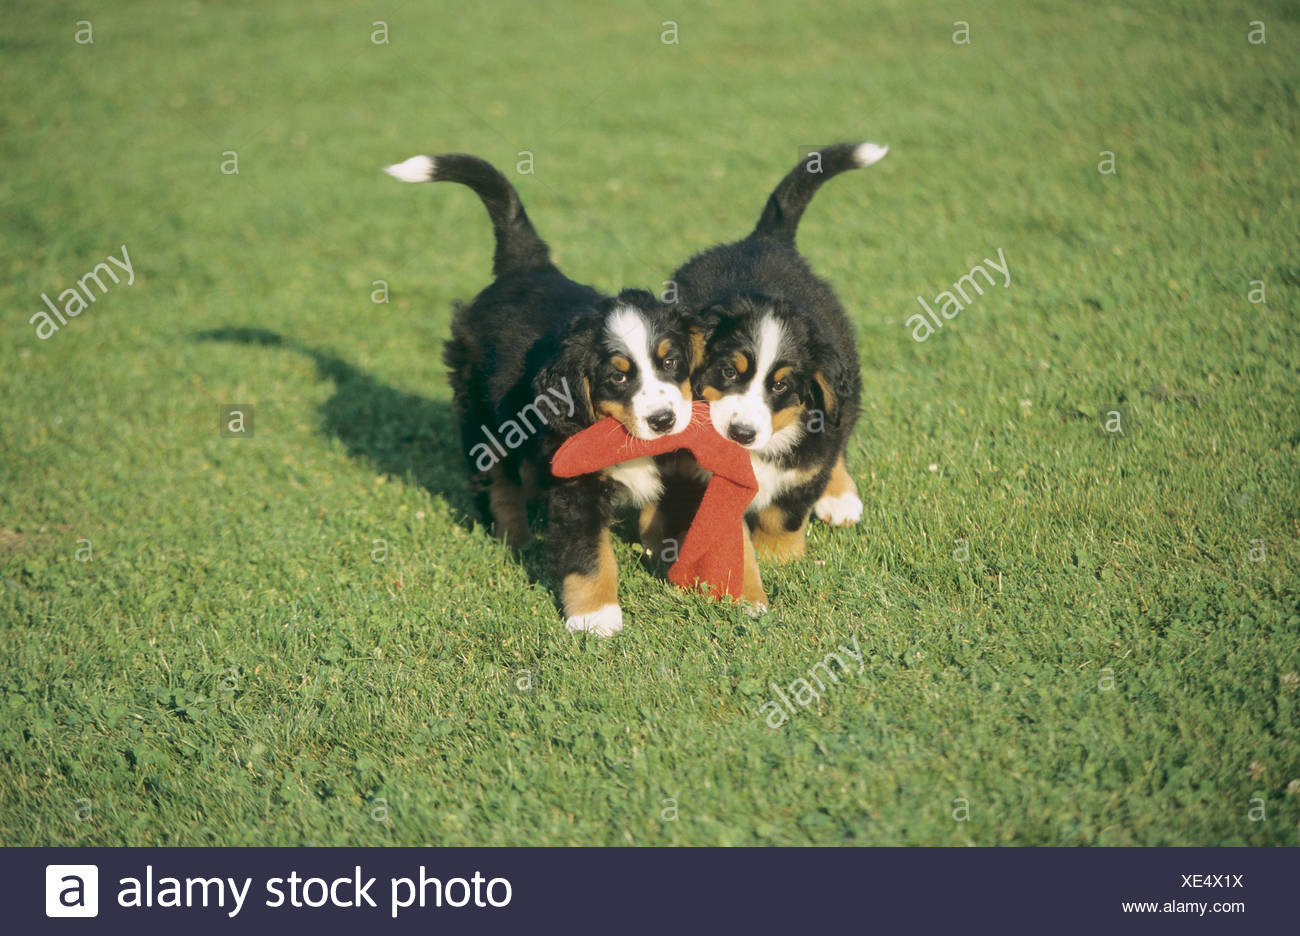 bernese mountain dog puppy biting